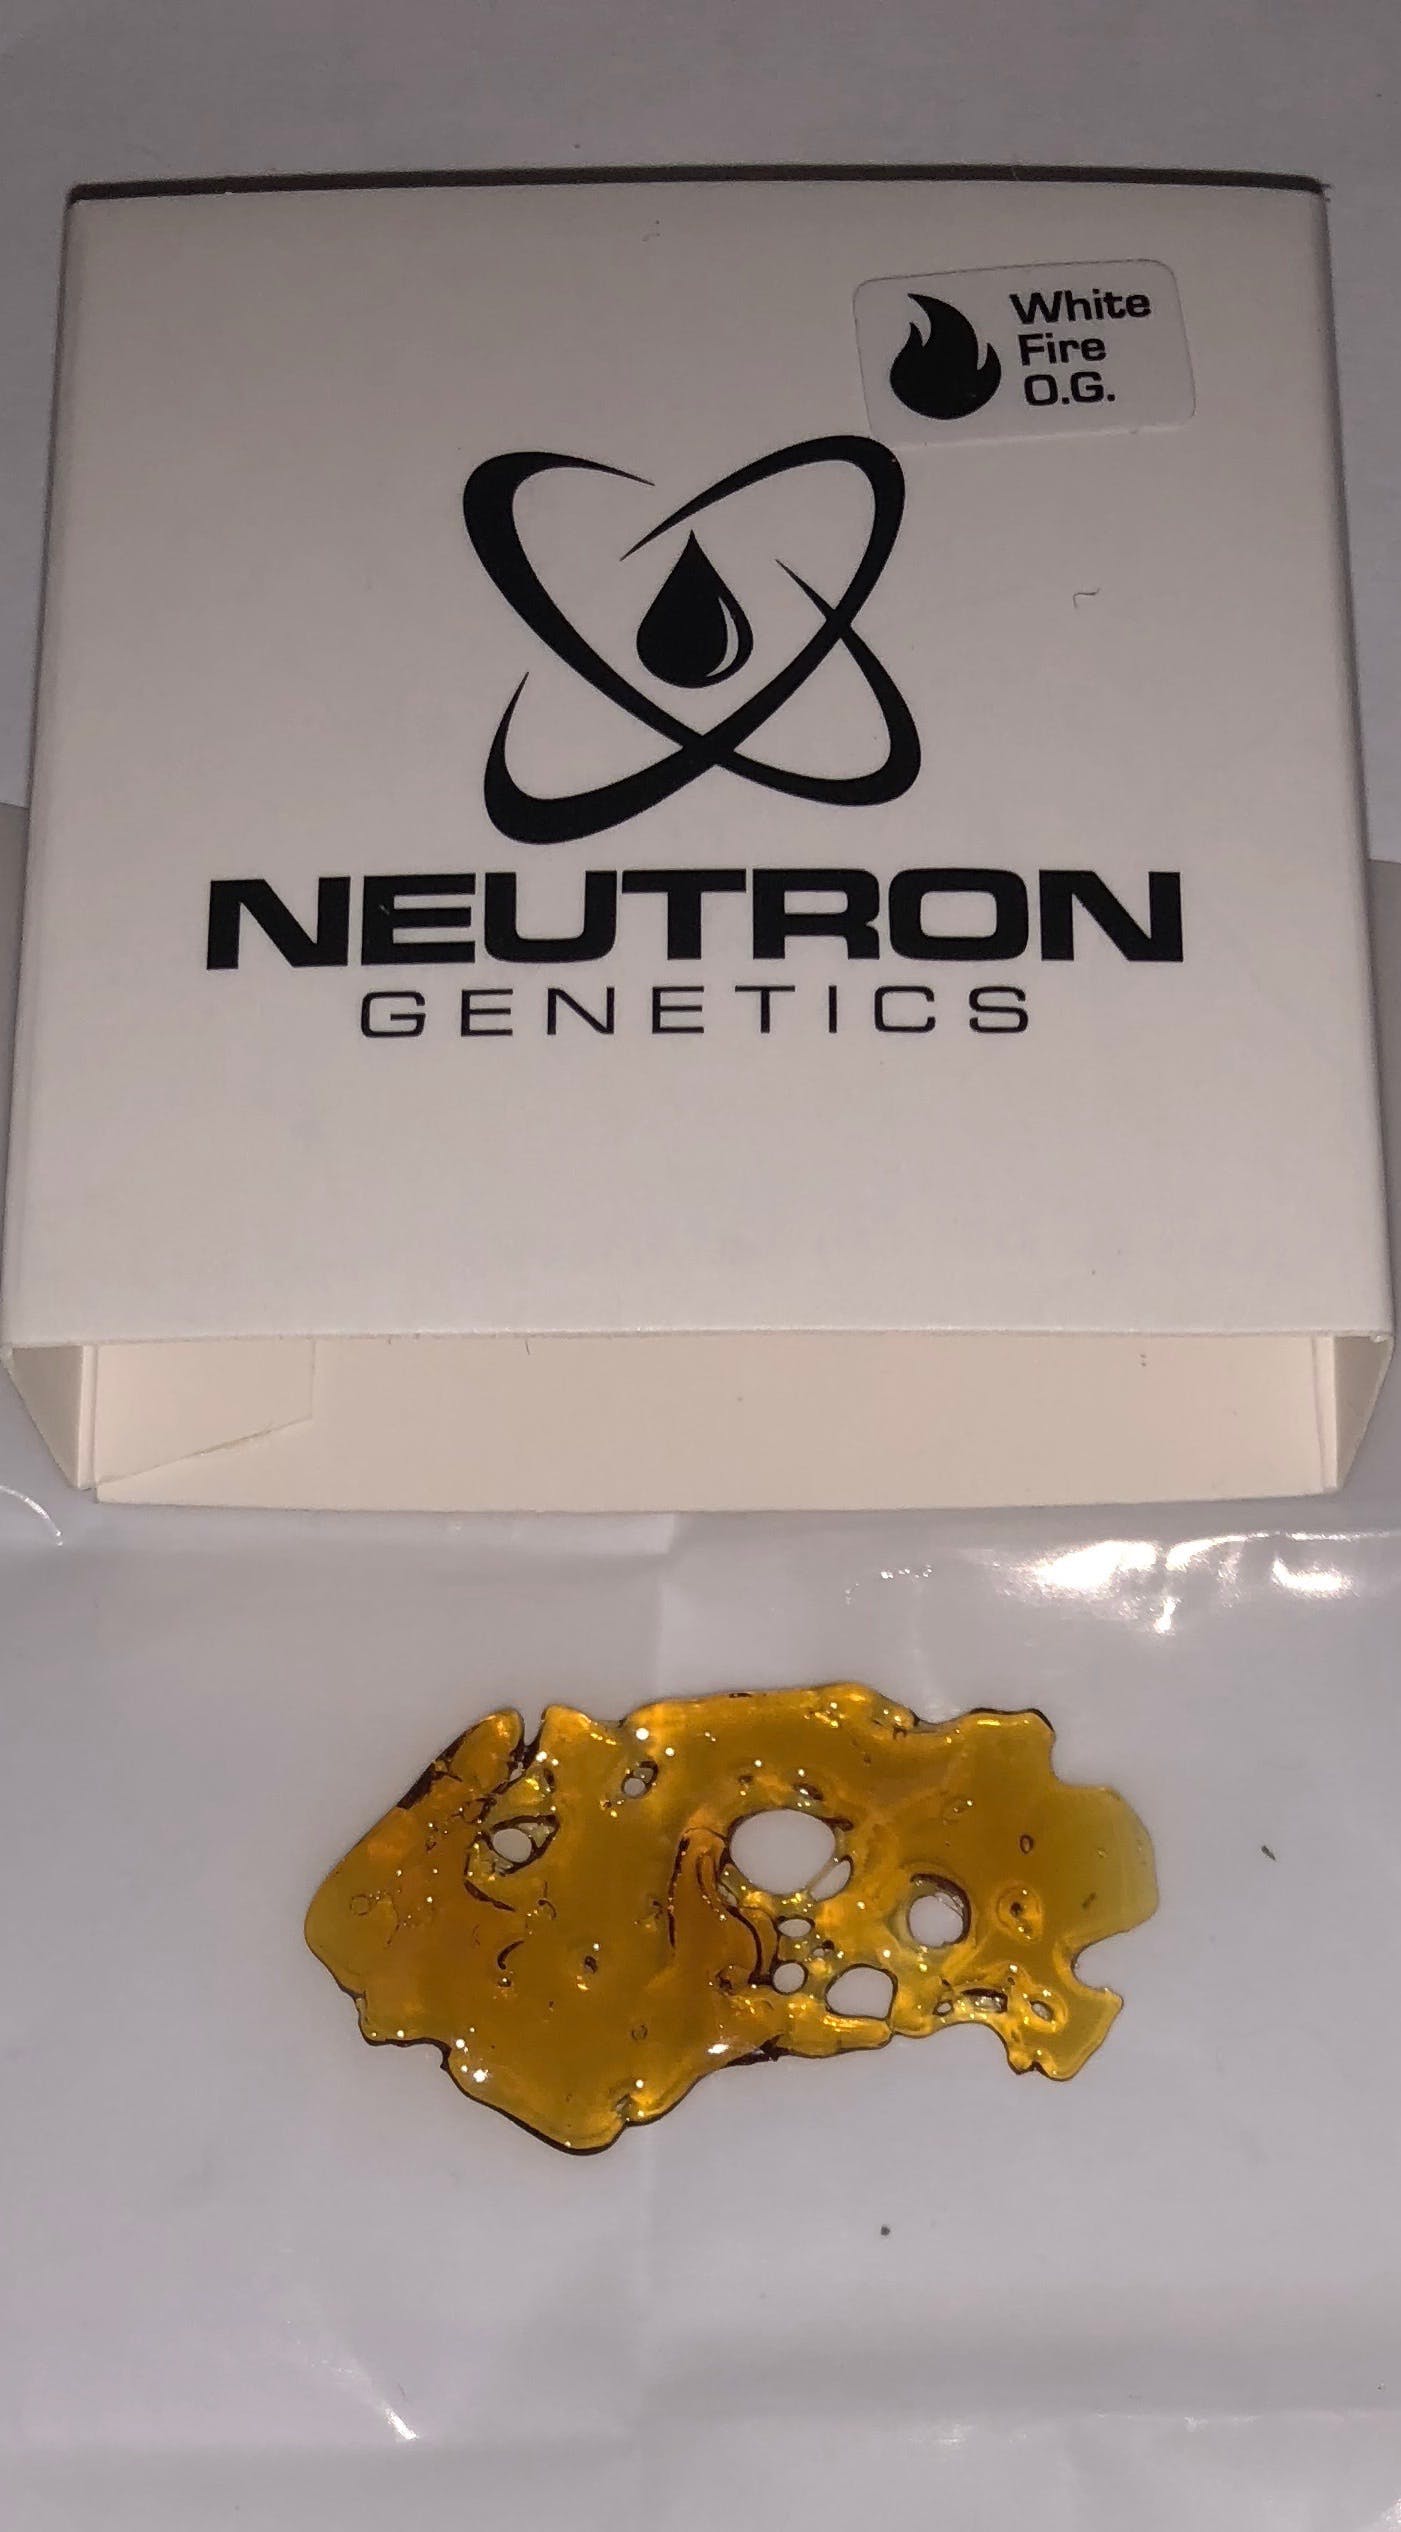 wax-neutron-genetics-nug-run-shatter